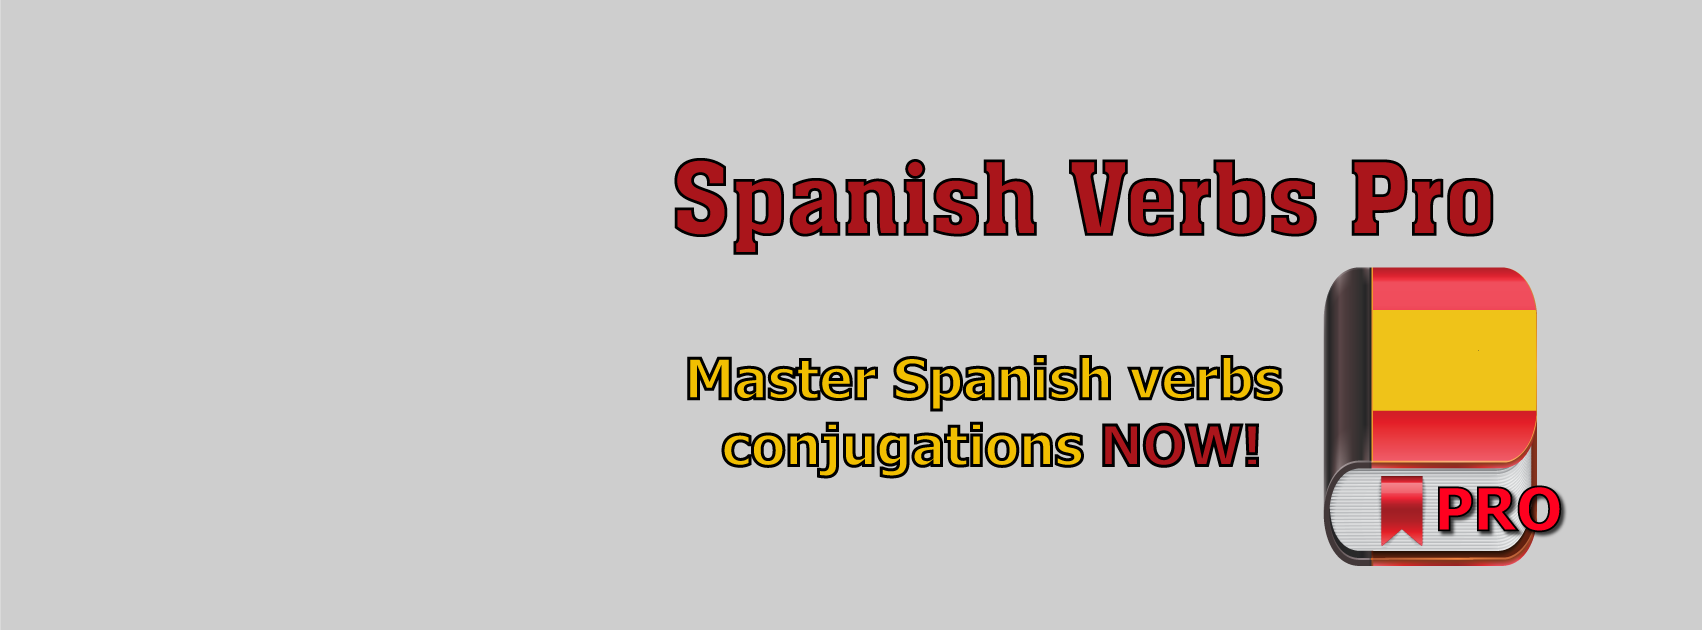 Spanish Verbs application